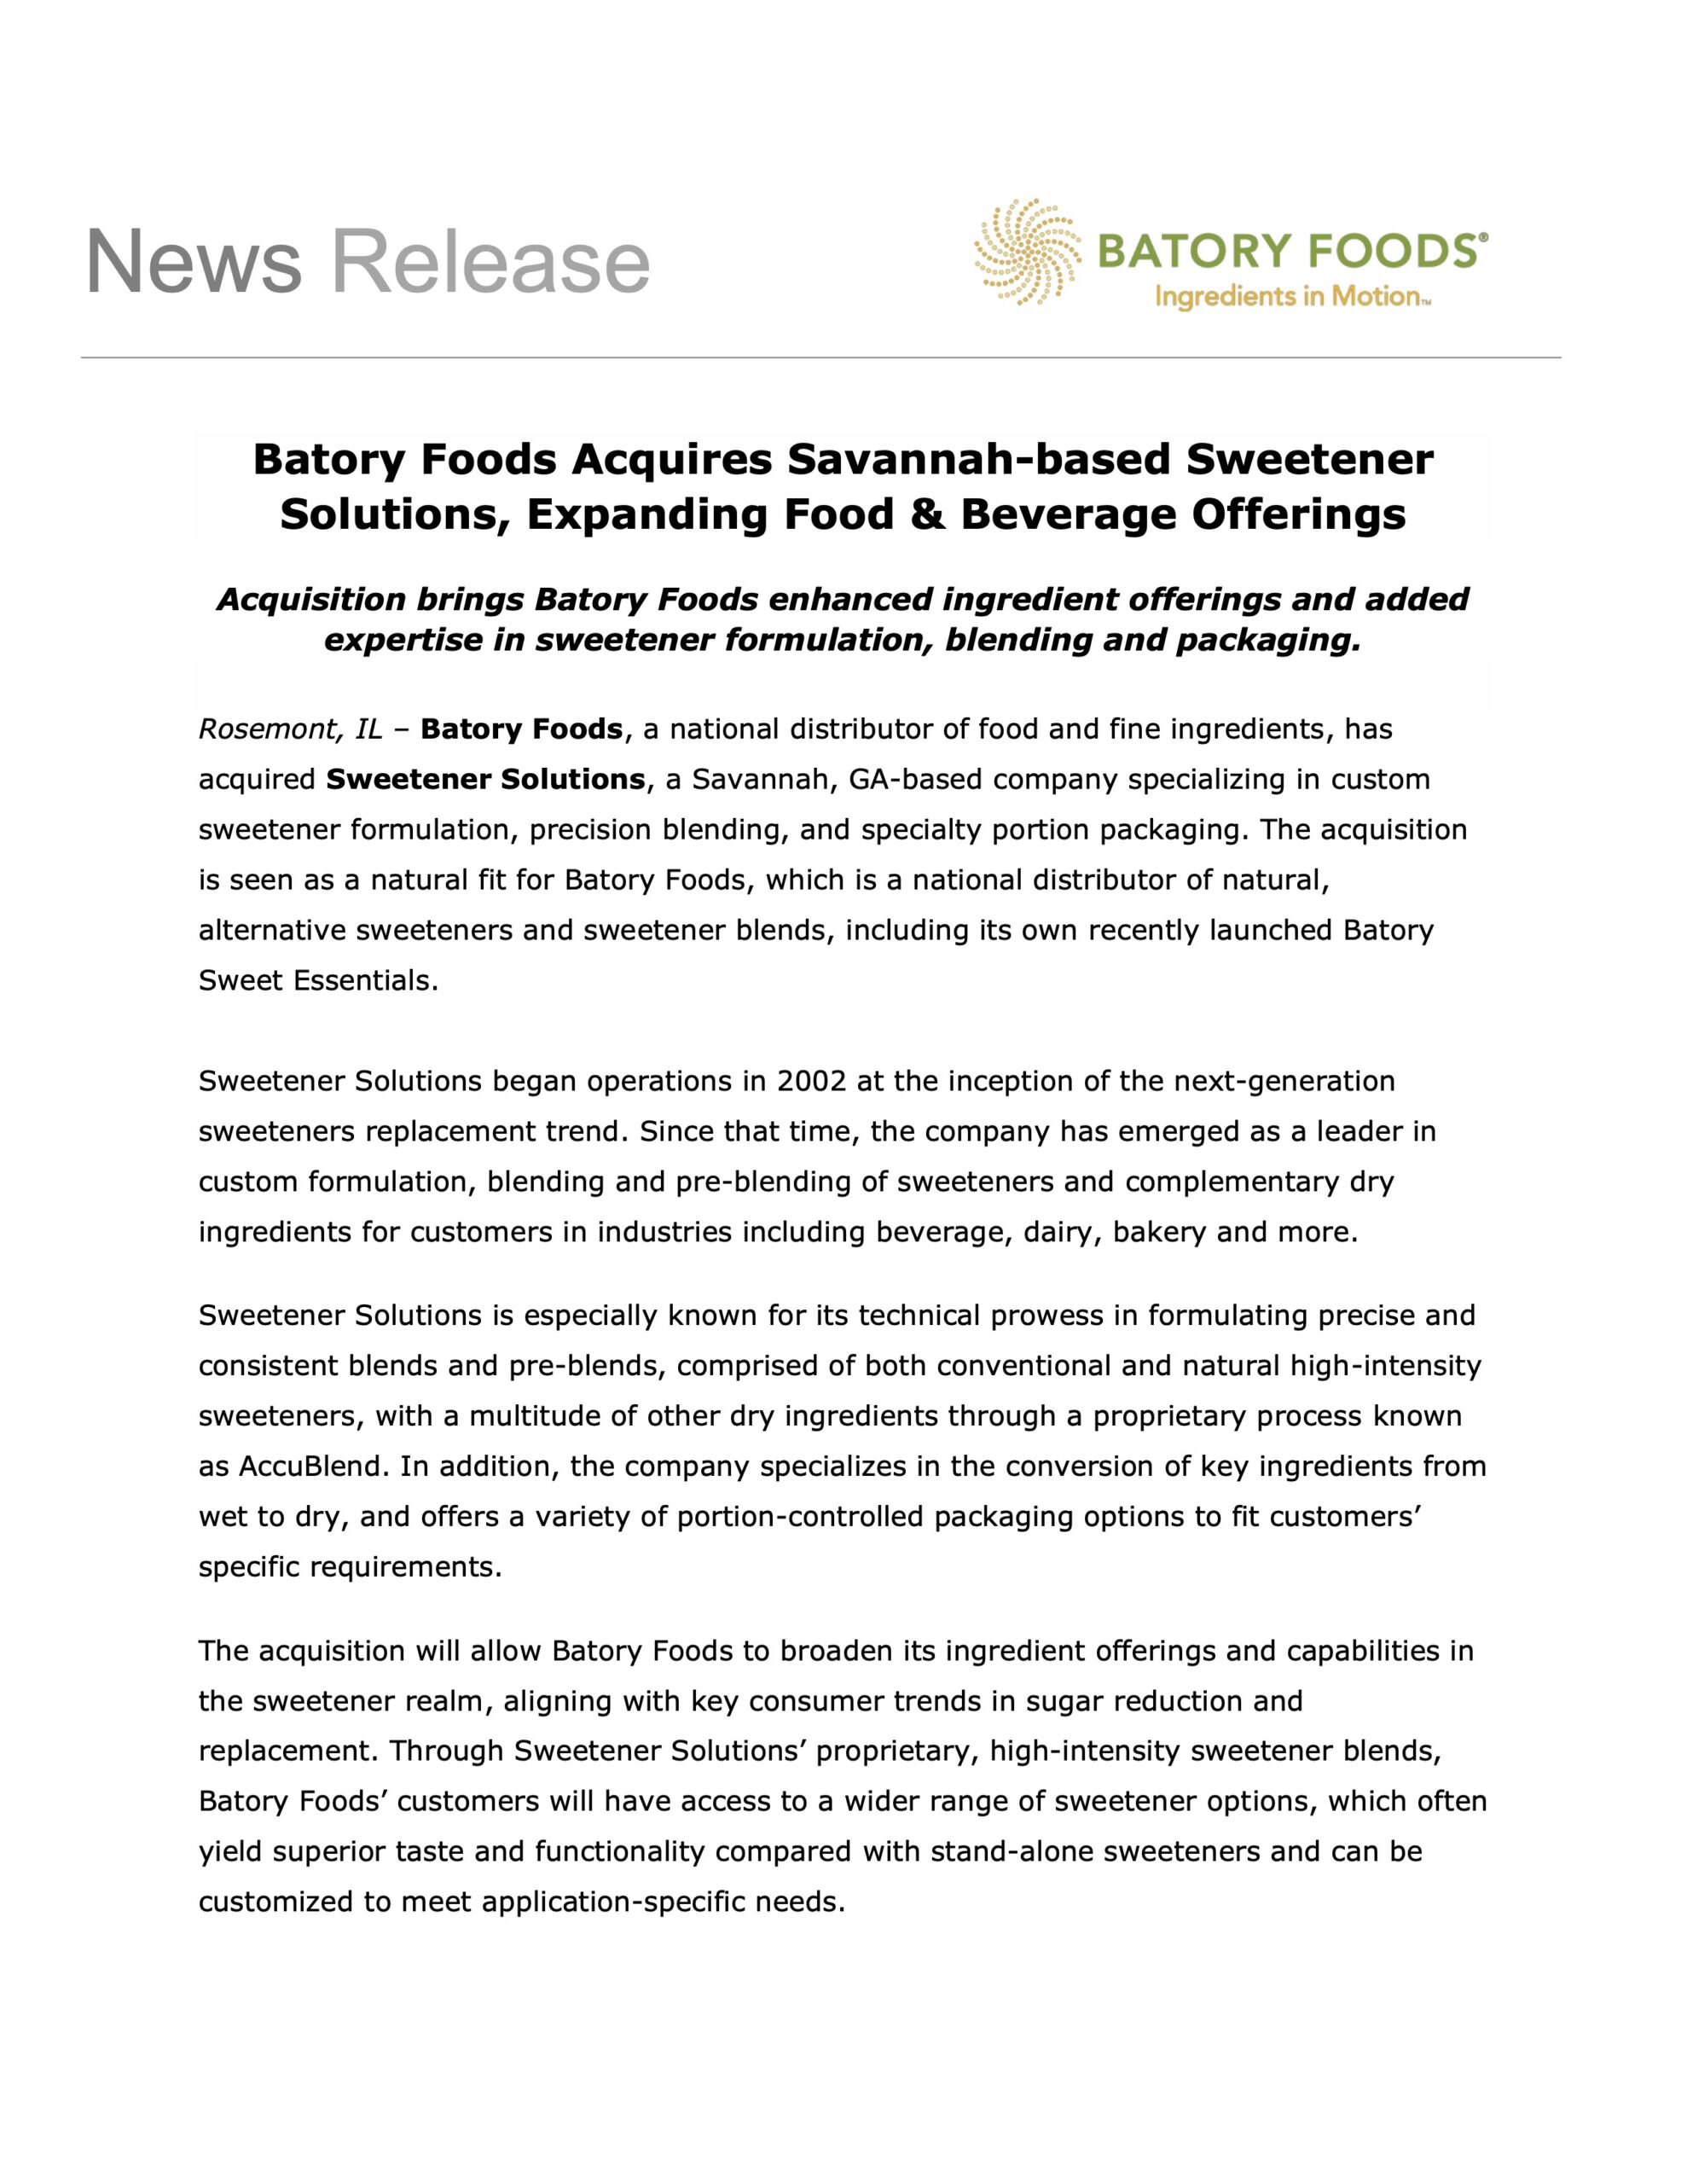 Batory Foods Acquires Sweetener Solutions